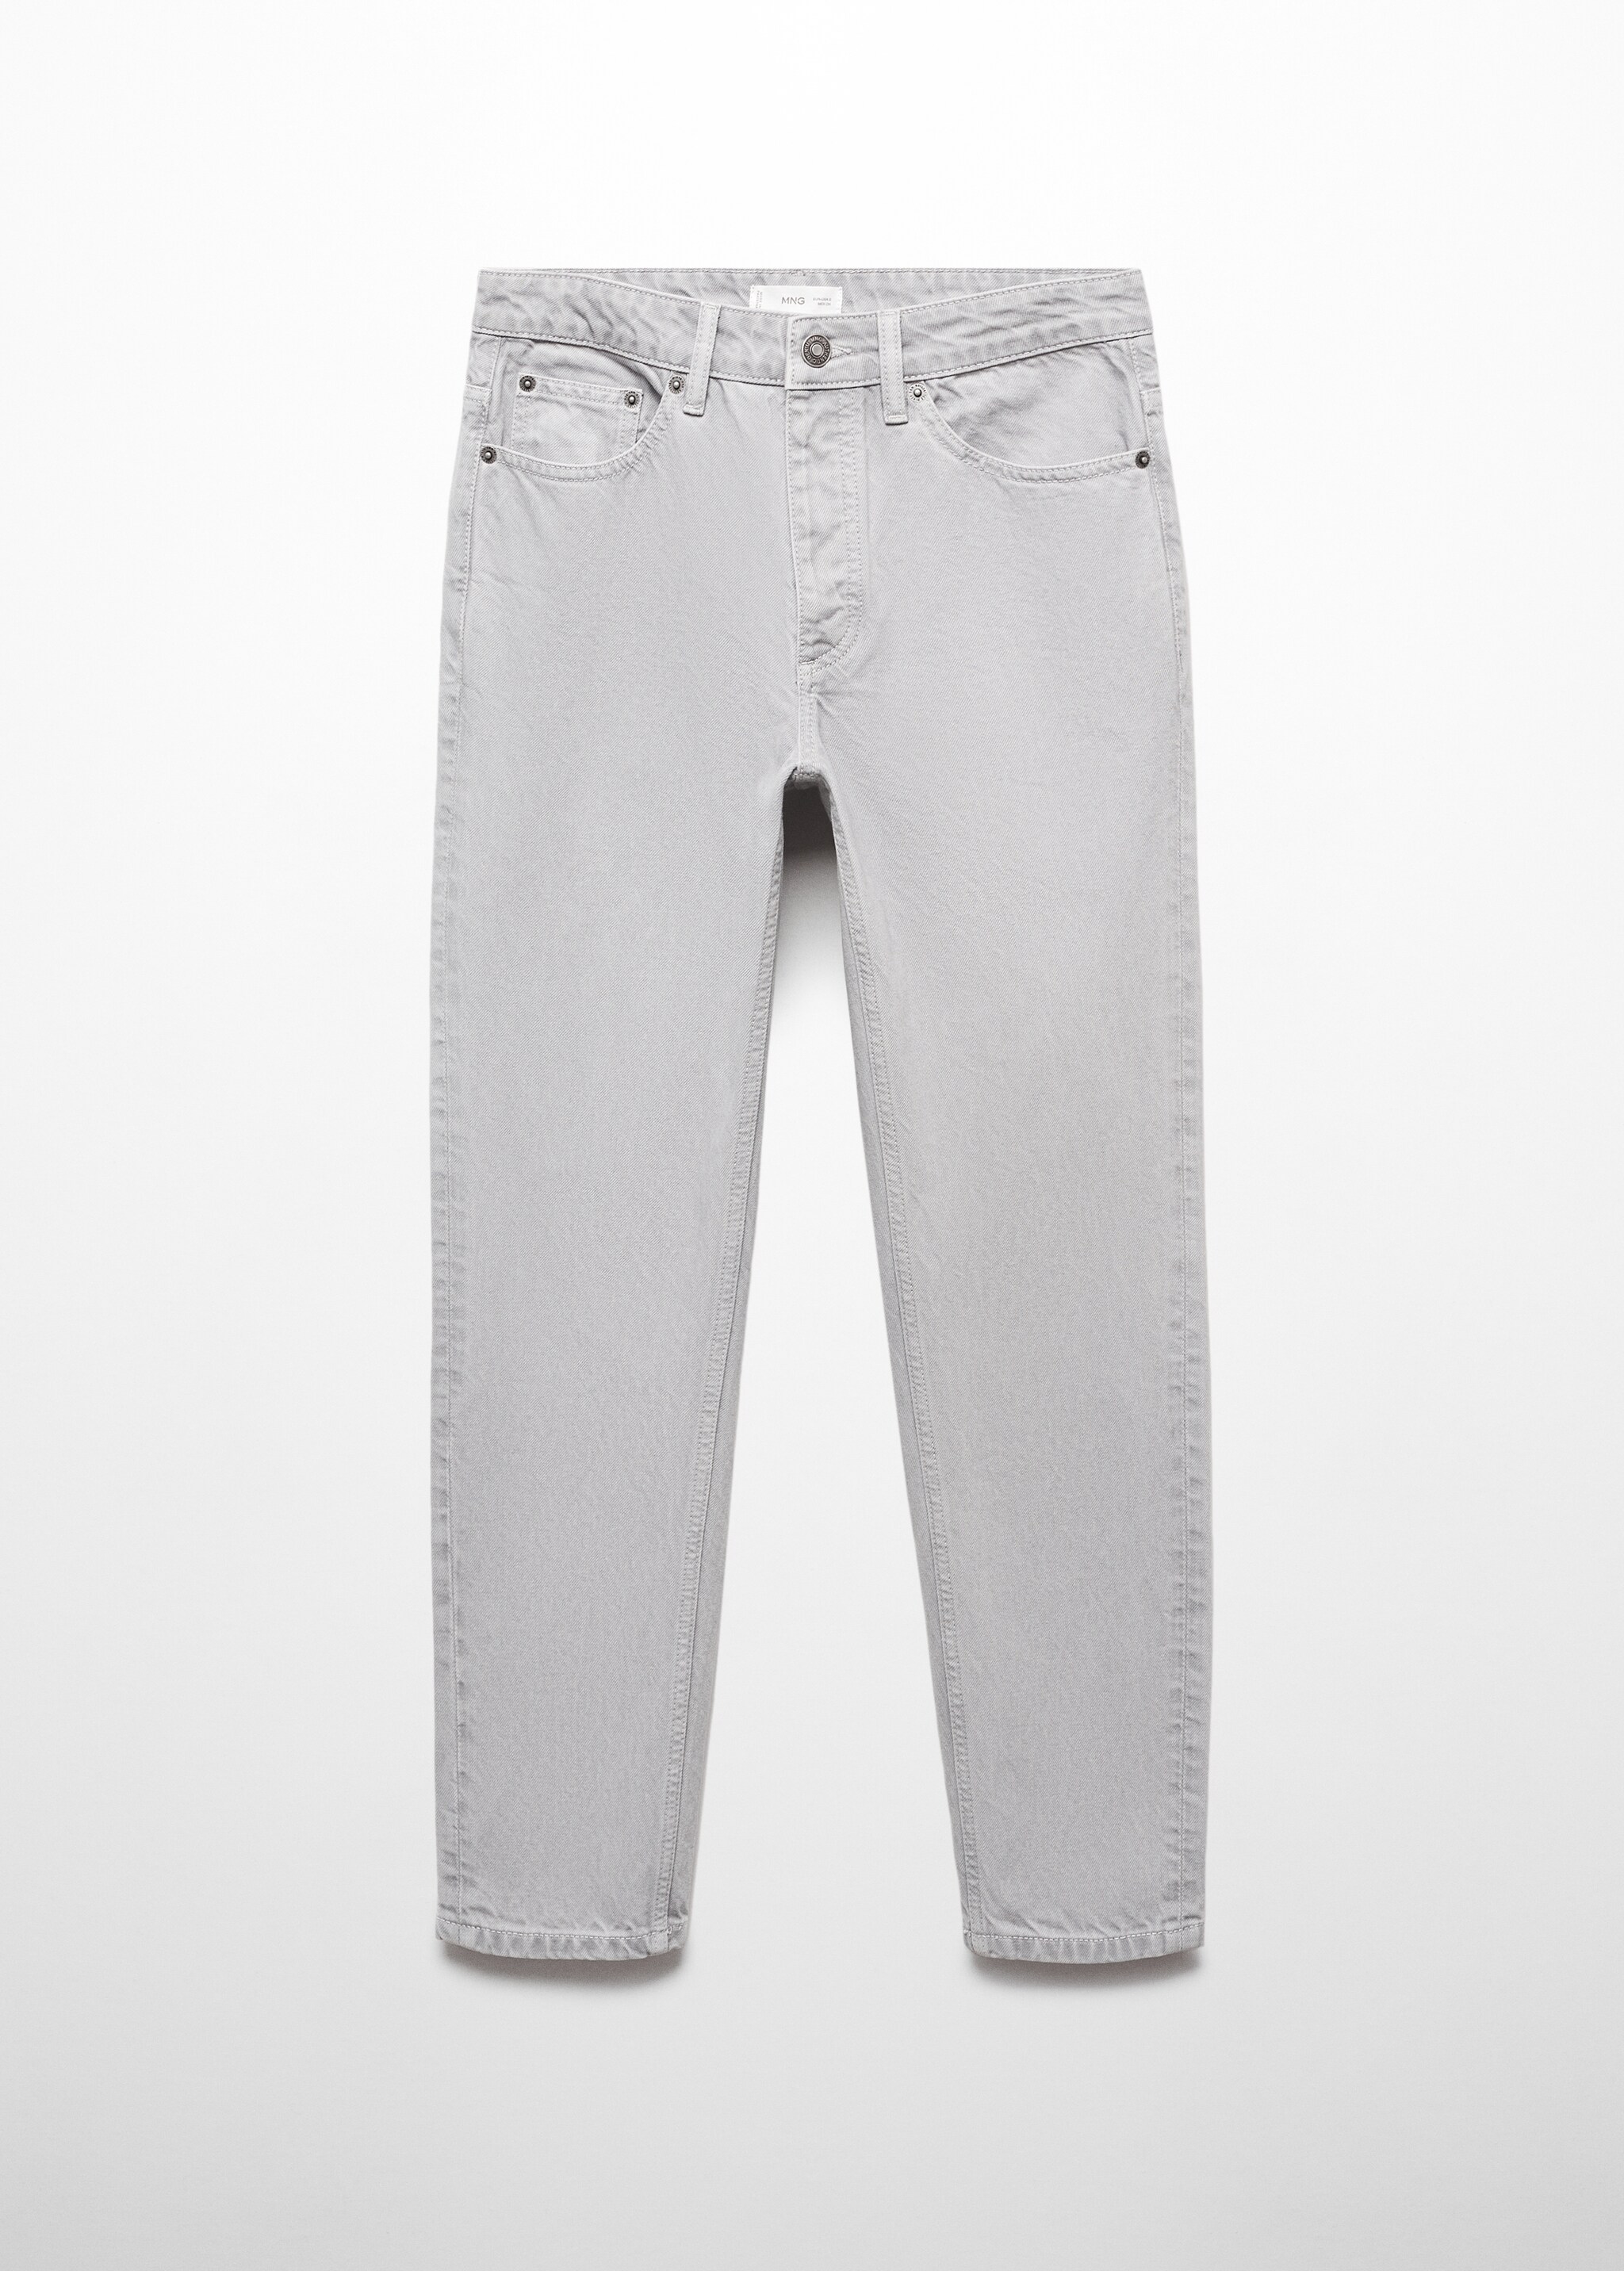 Pantalón regular fit algodón - Artículo sin modelo